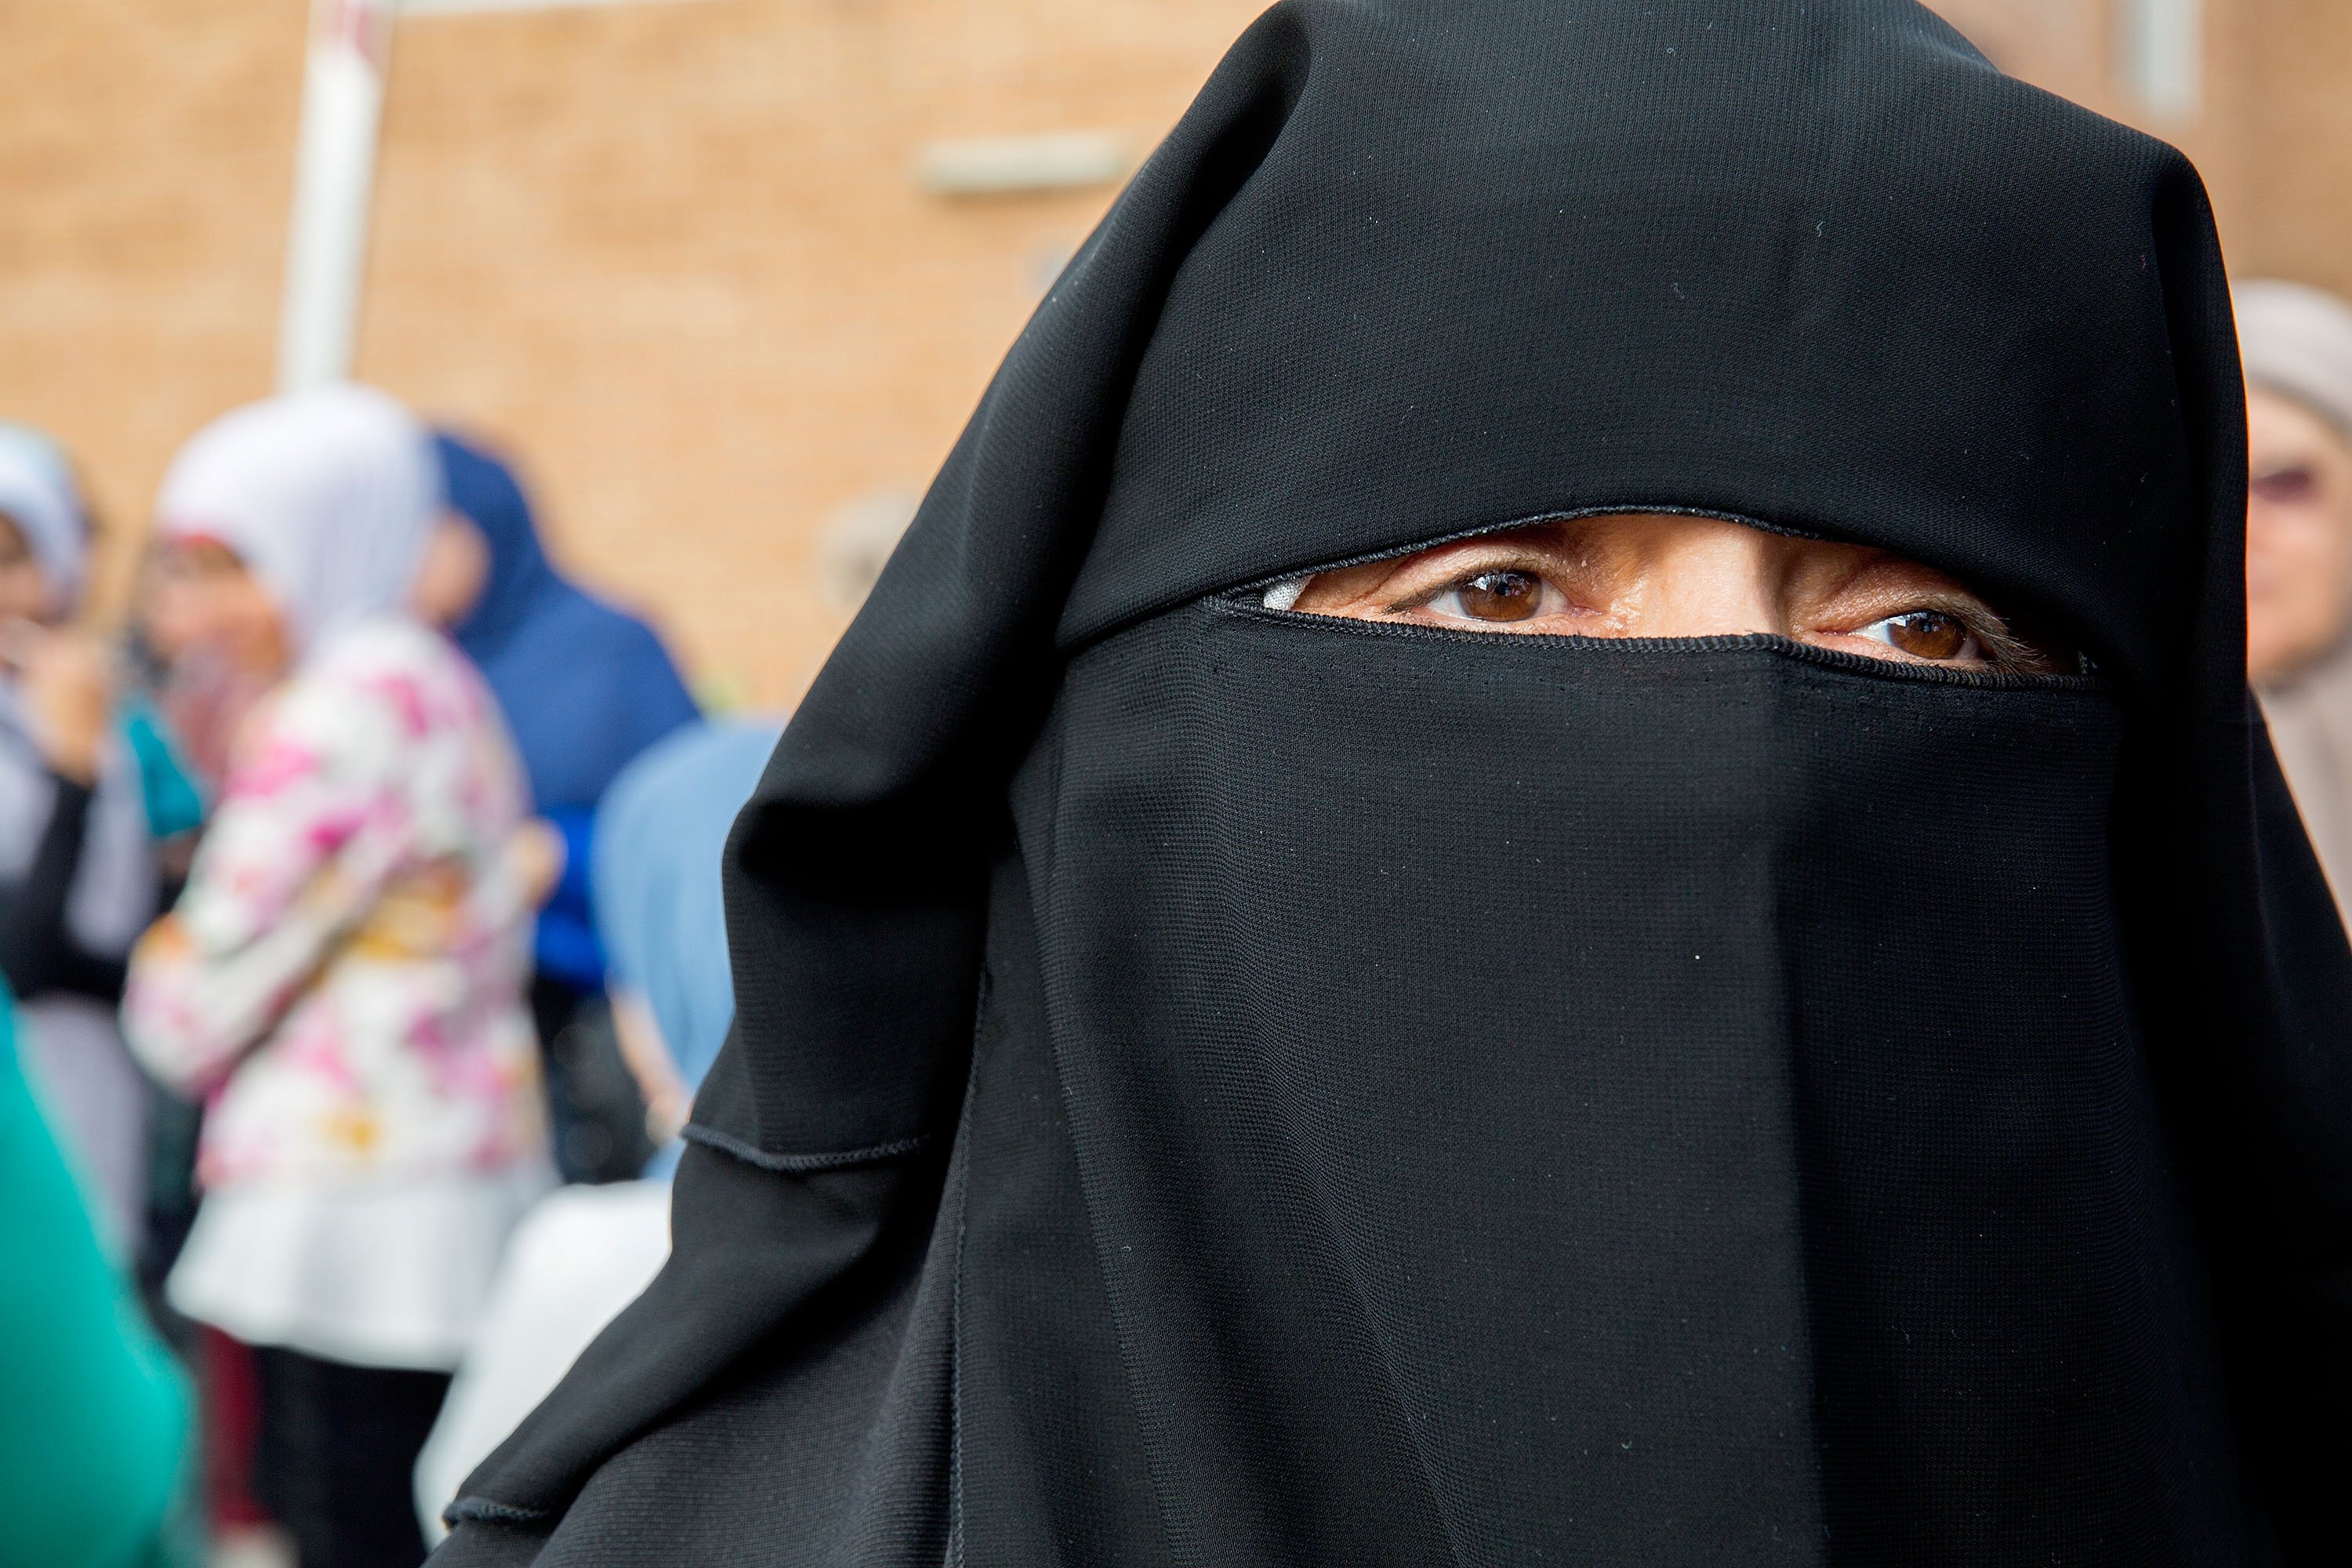 A Muslim woman wearing a niqab during the Eid al-Adha | Photo: Getty Images